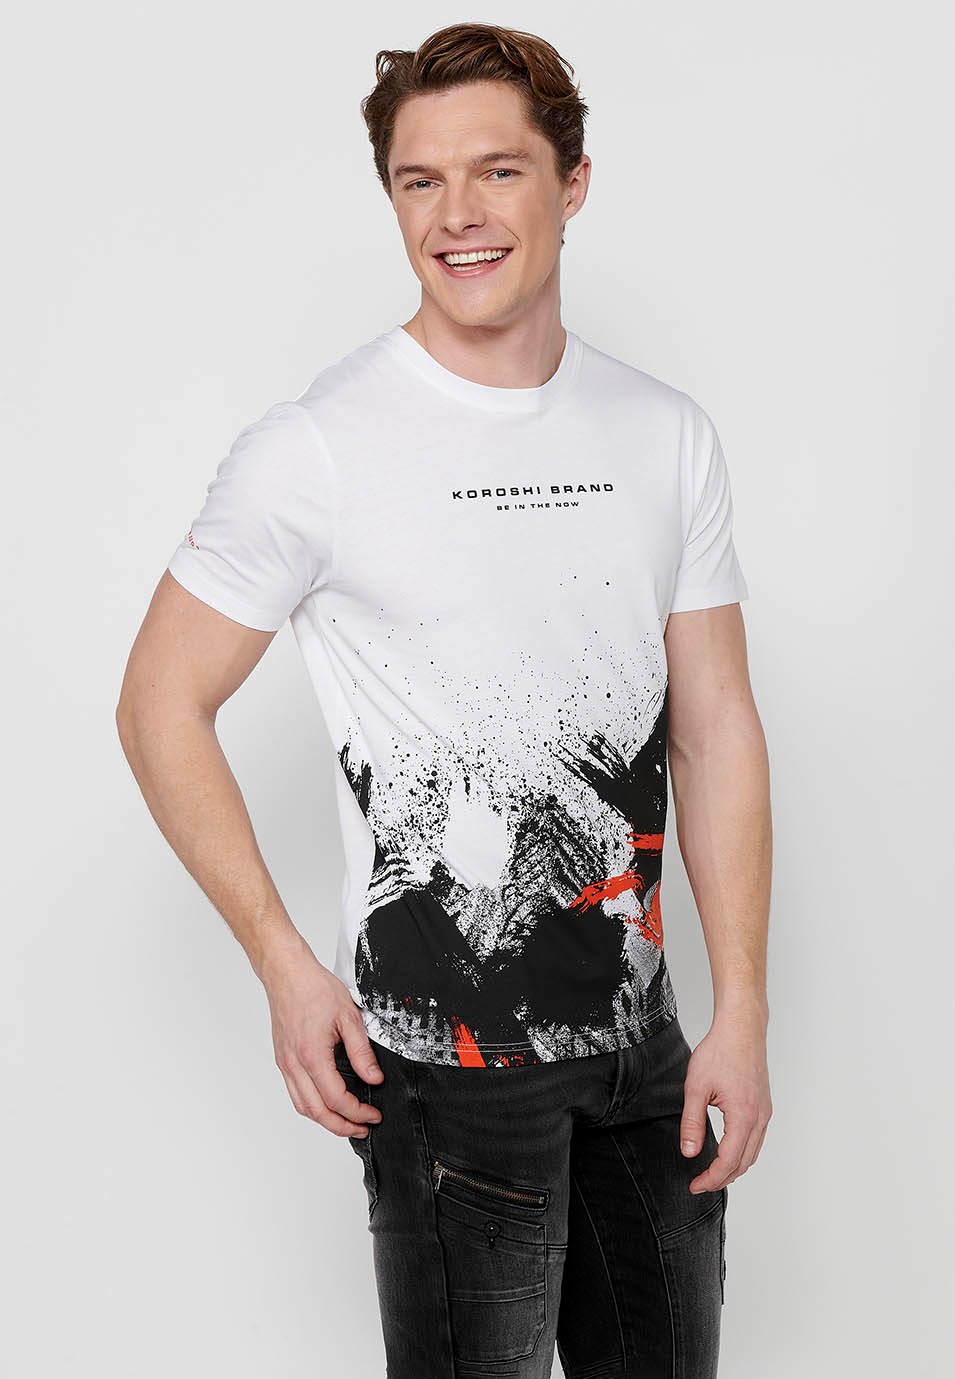 Short-sleeved cotton T-shirt, gradient front print, white color for men